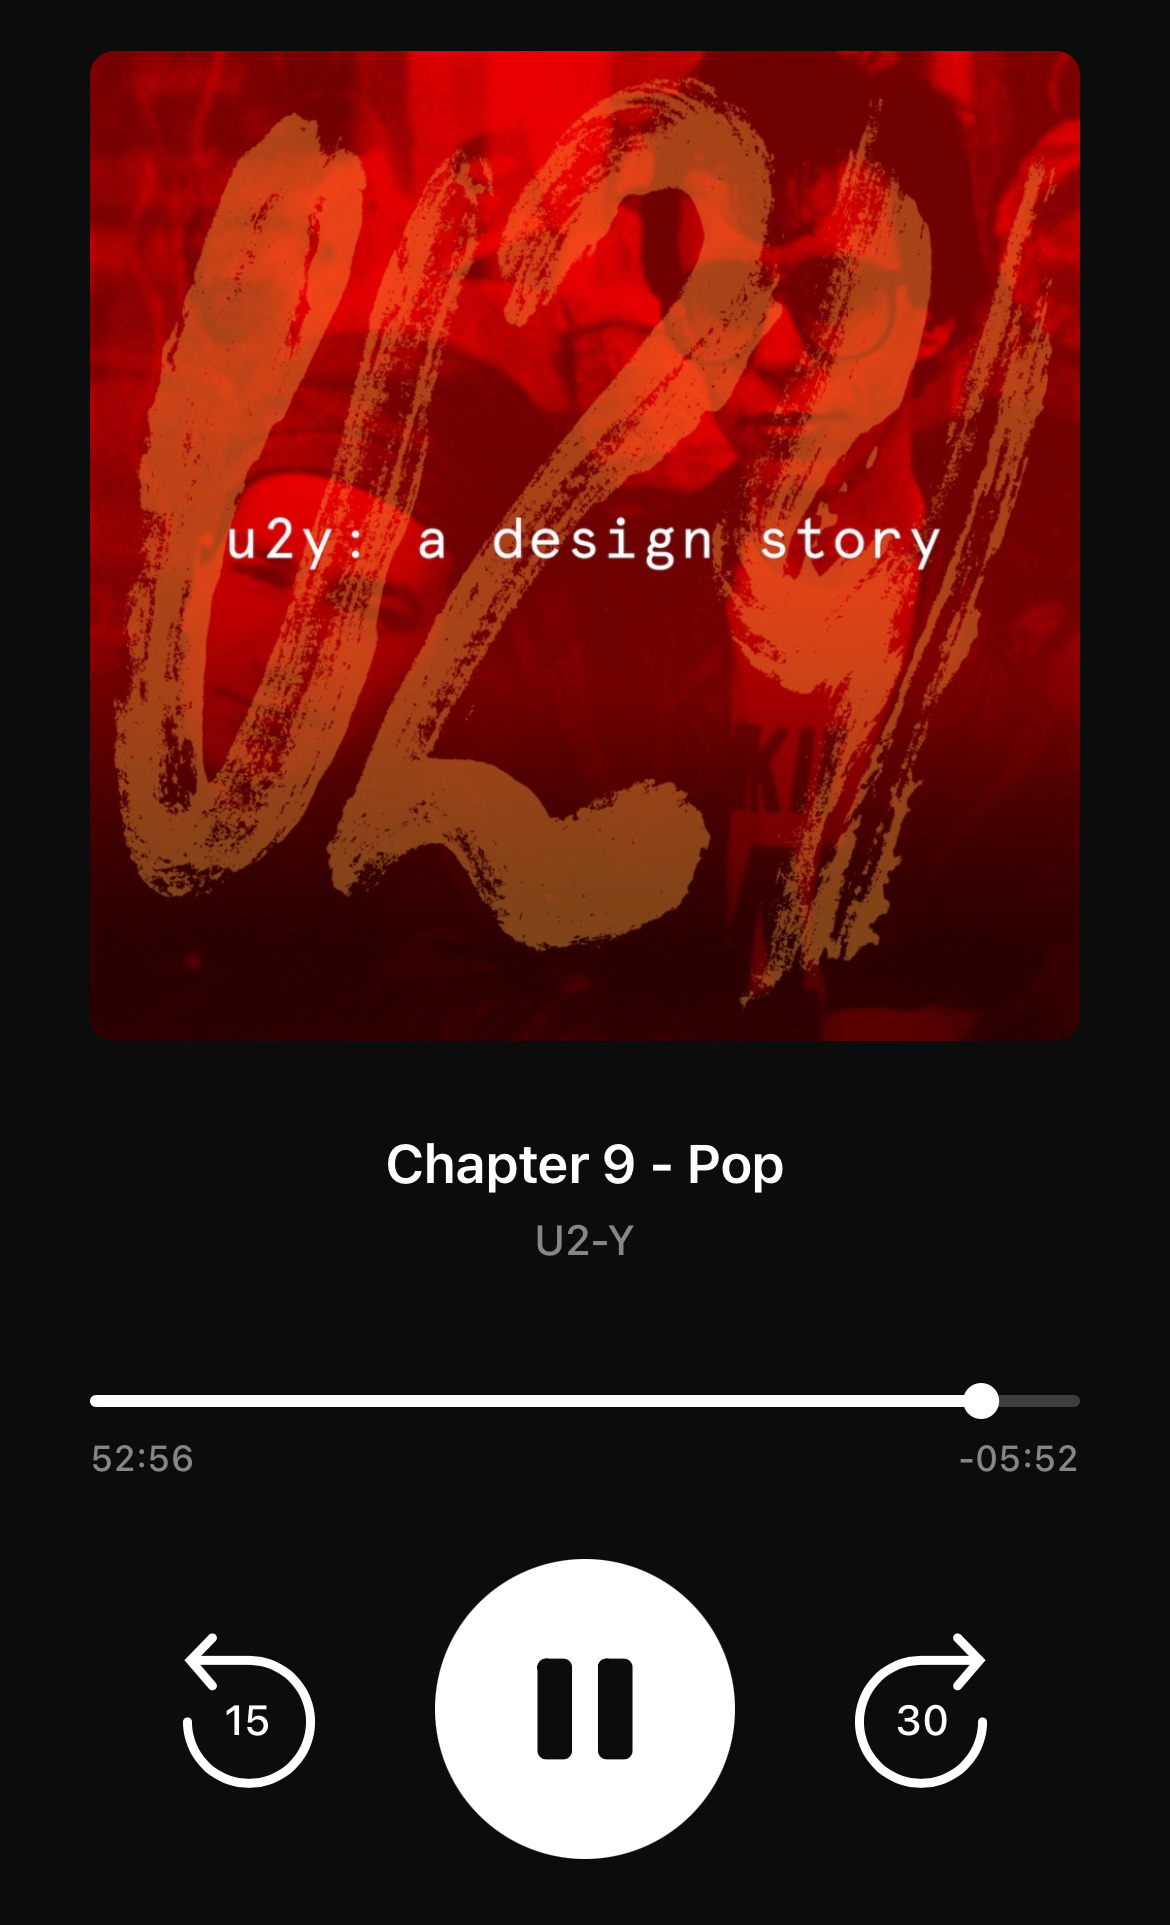 U2y podcast episode on Pop